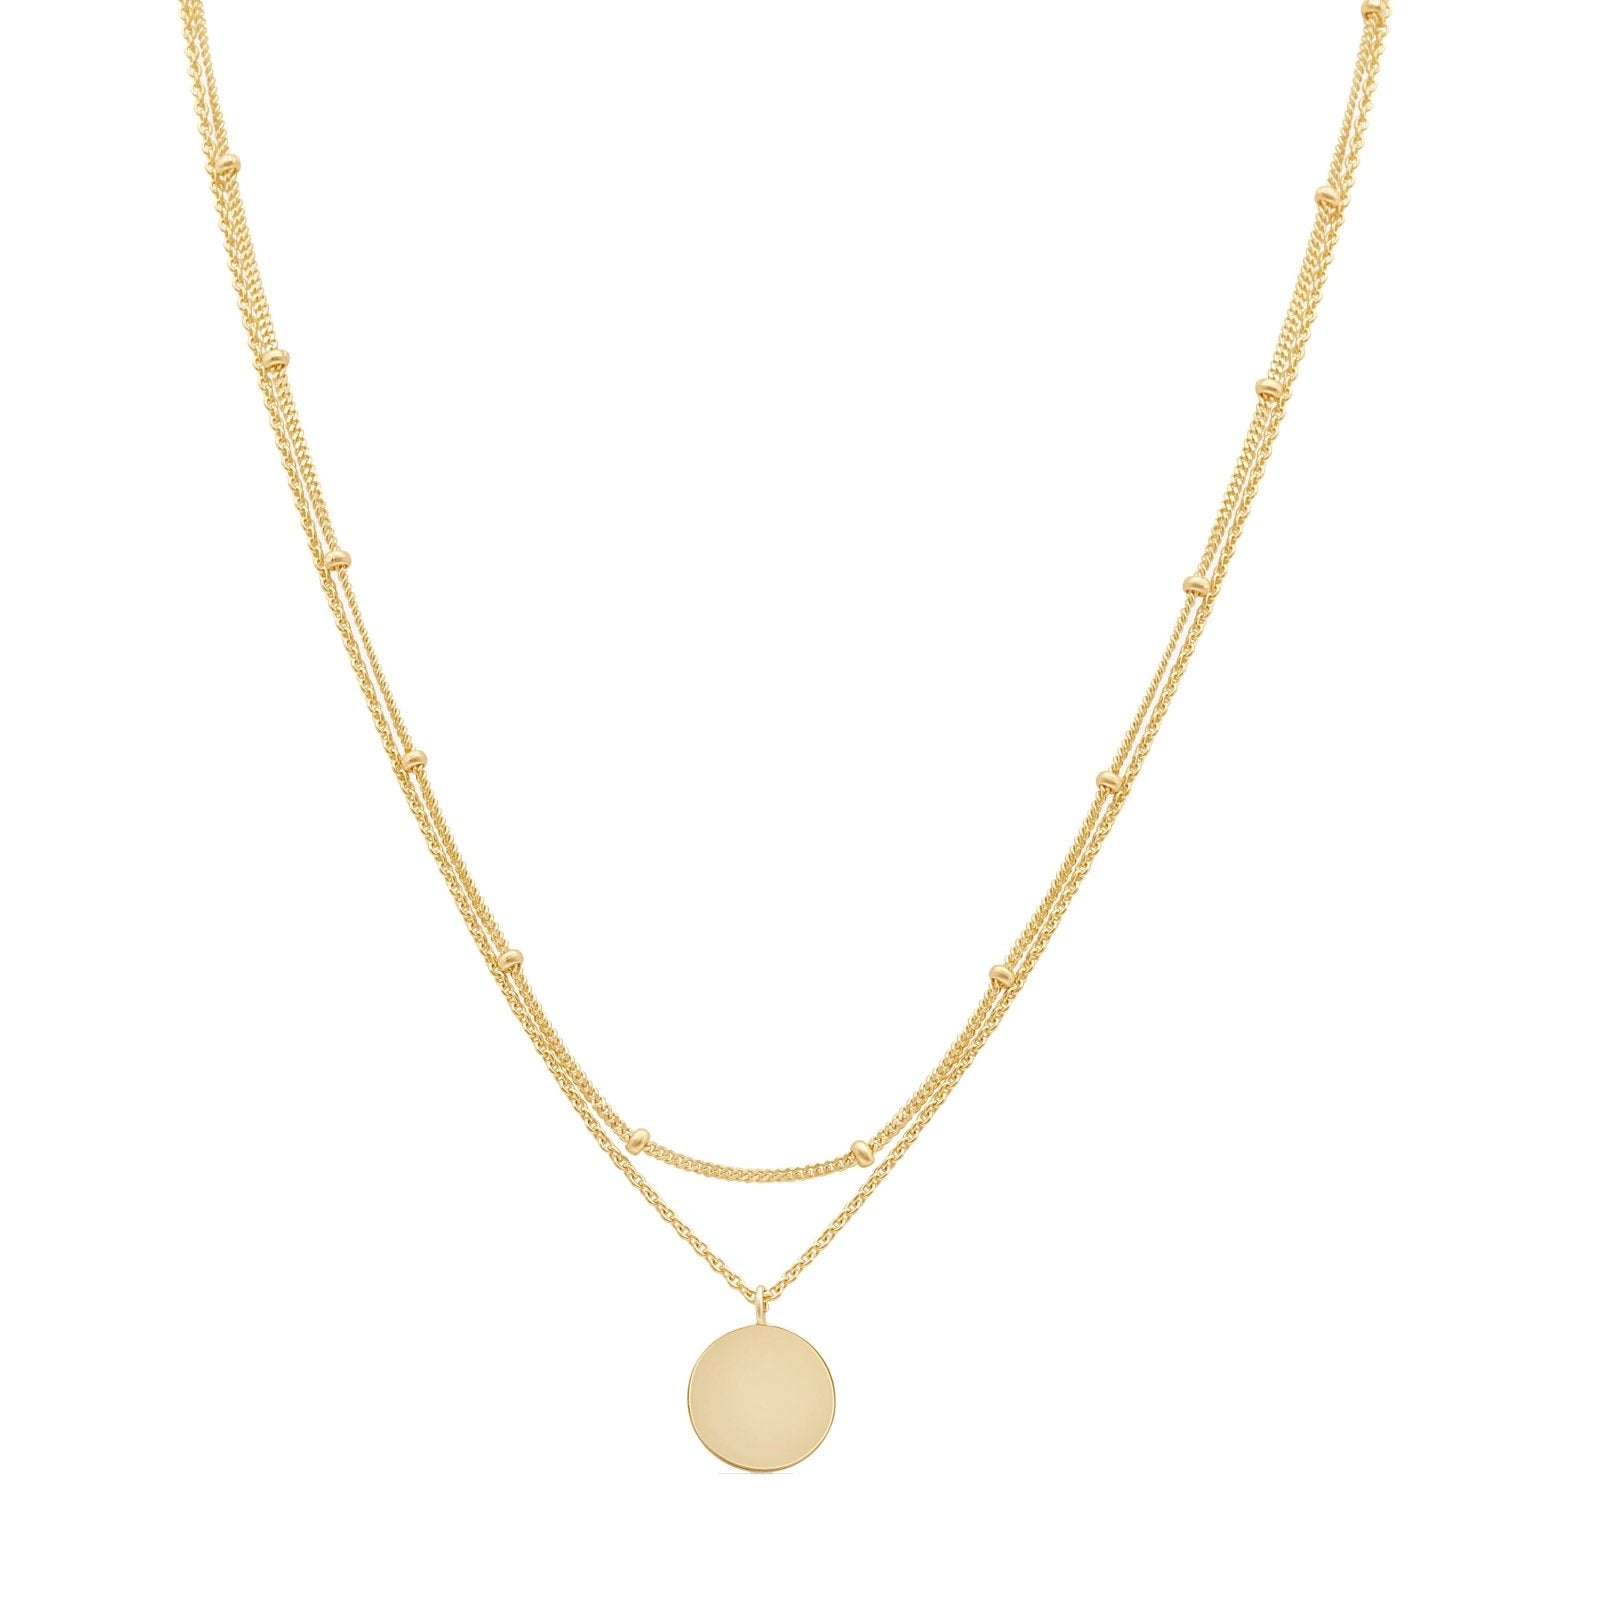 Beaded Double Wrap Medallion Necklace Necklaces Estella Collection #product_description# 14k Layering Necklace Ready to Ship #tag4# #tag5# #tag6# #tag7# #tag8# #tag9# #tag10#